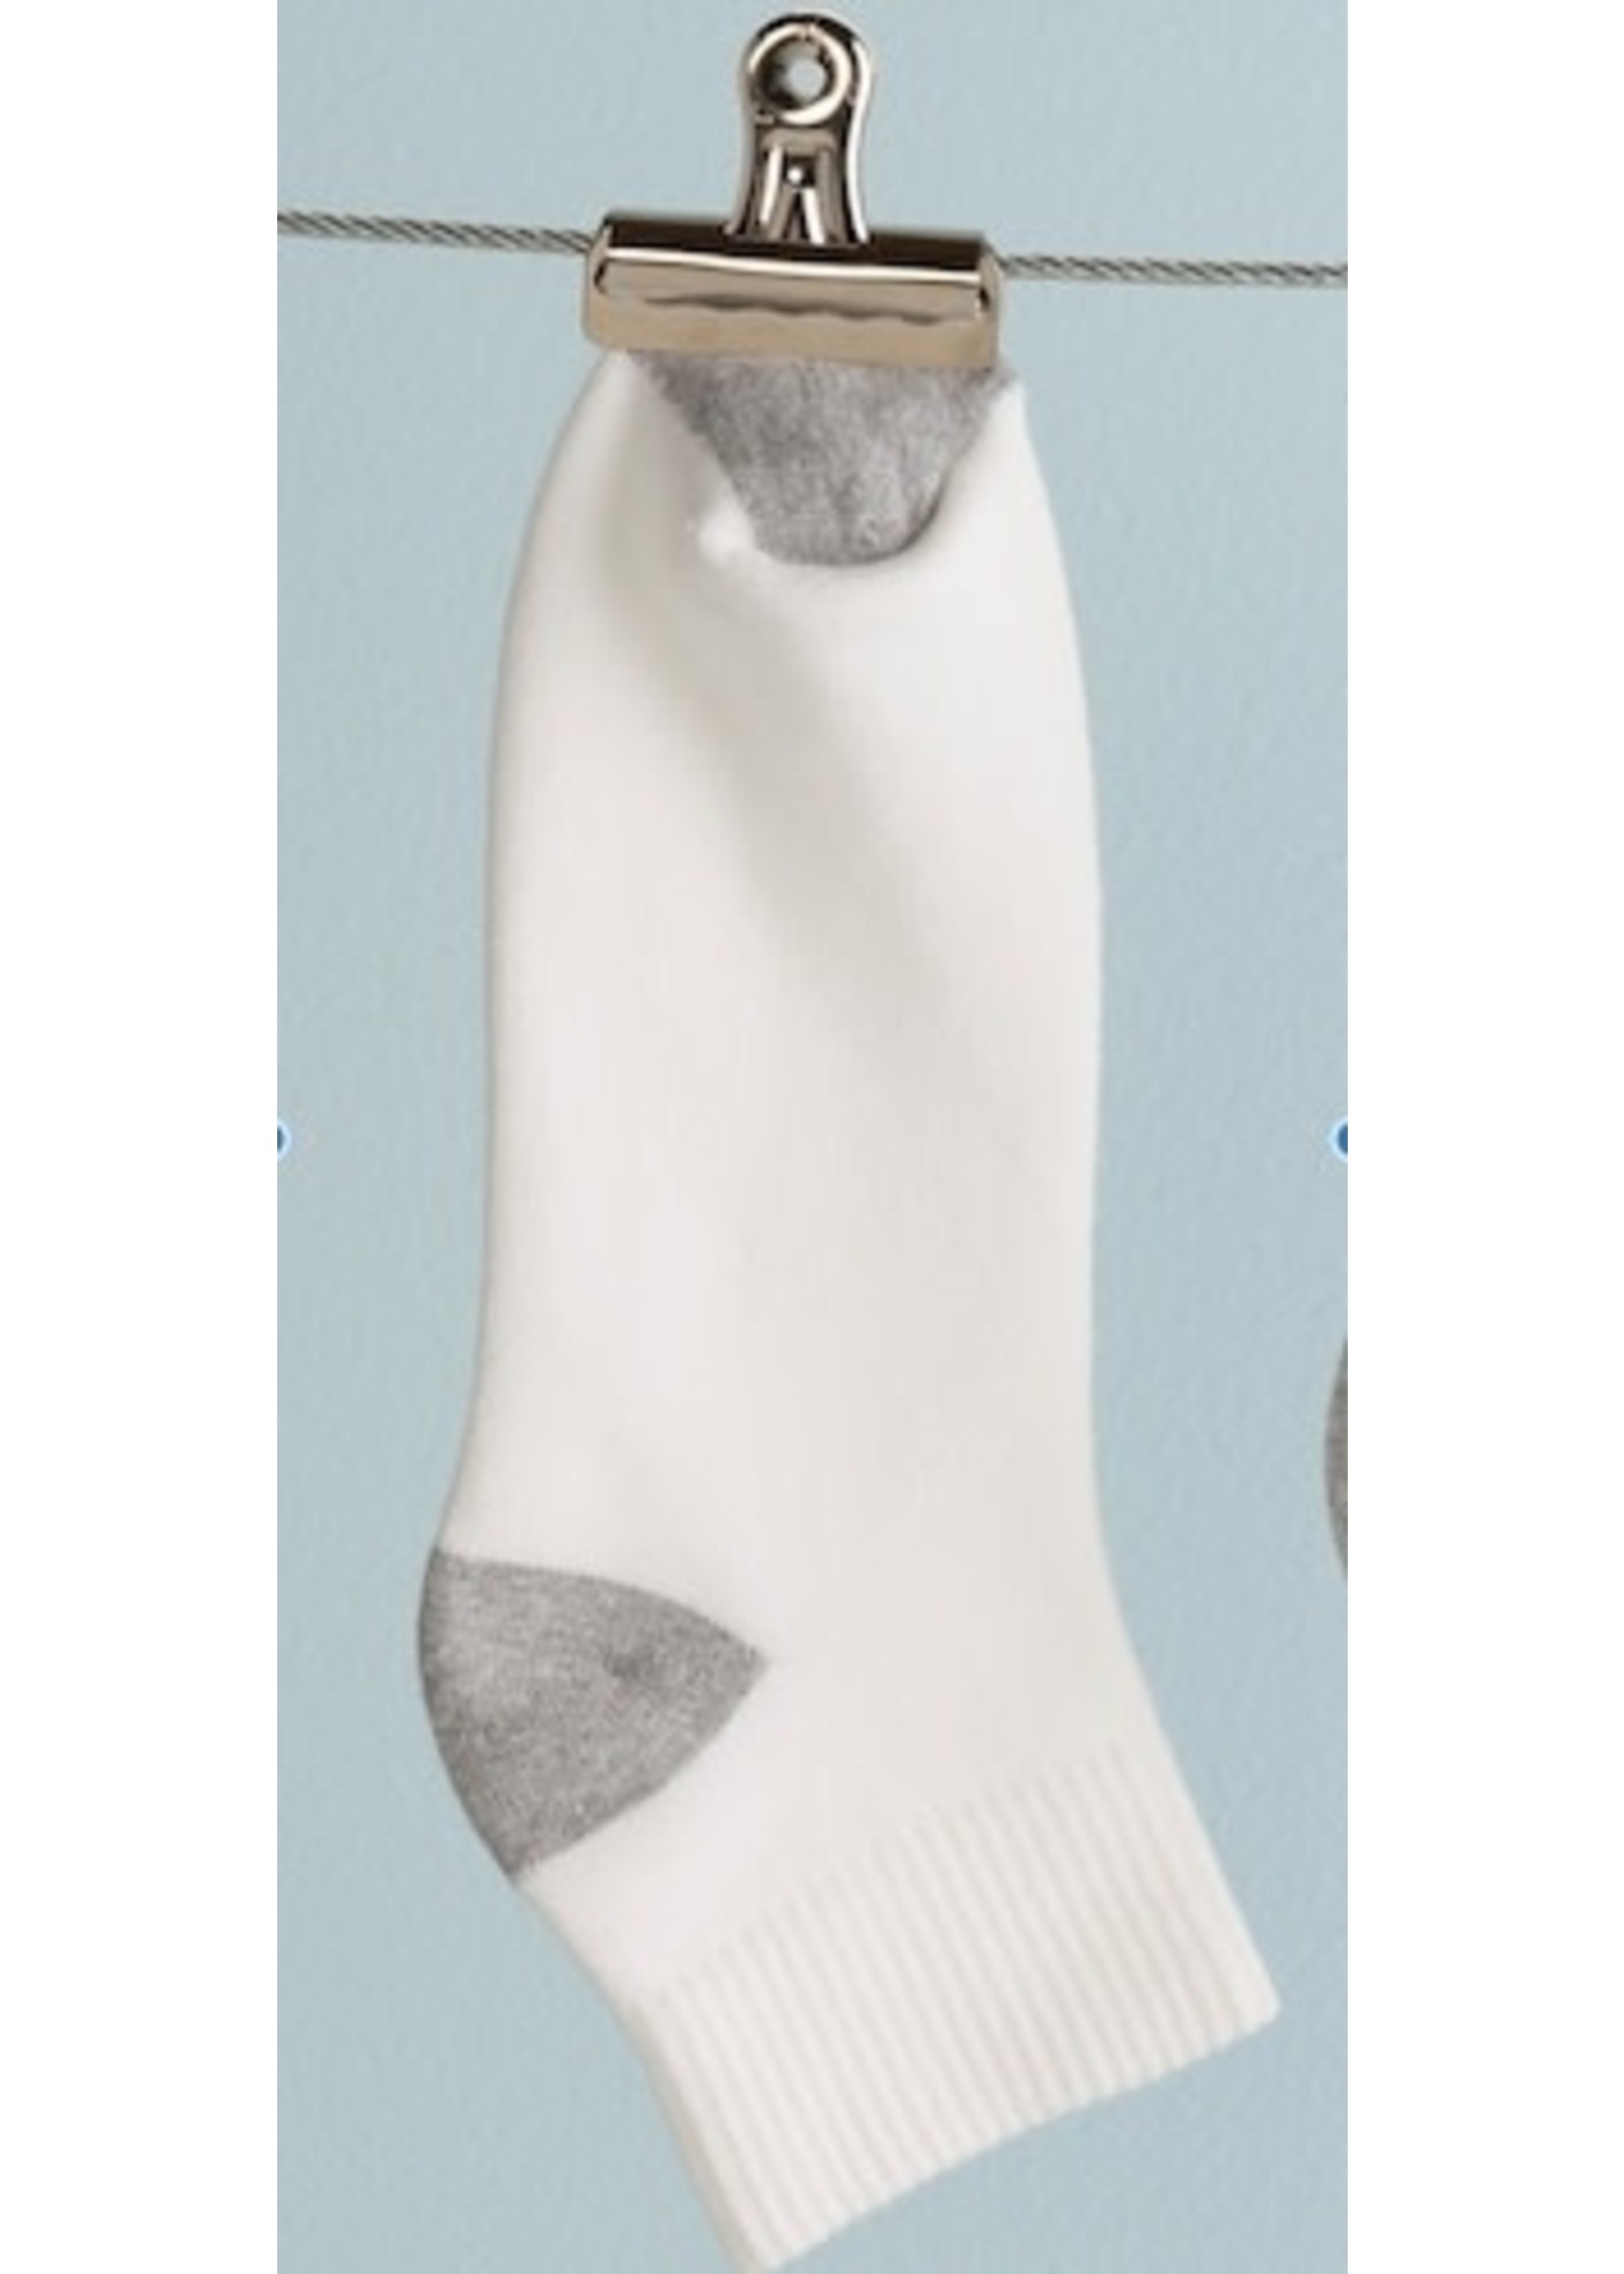 NON-UNIFORM Sport sock, 40% Cotton, 40% coolmax, 17% nylon, 3% spandex.